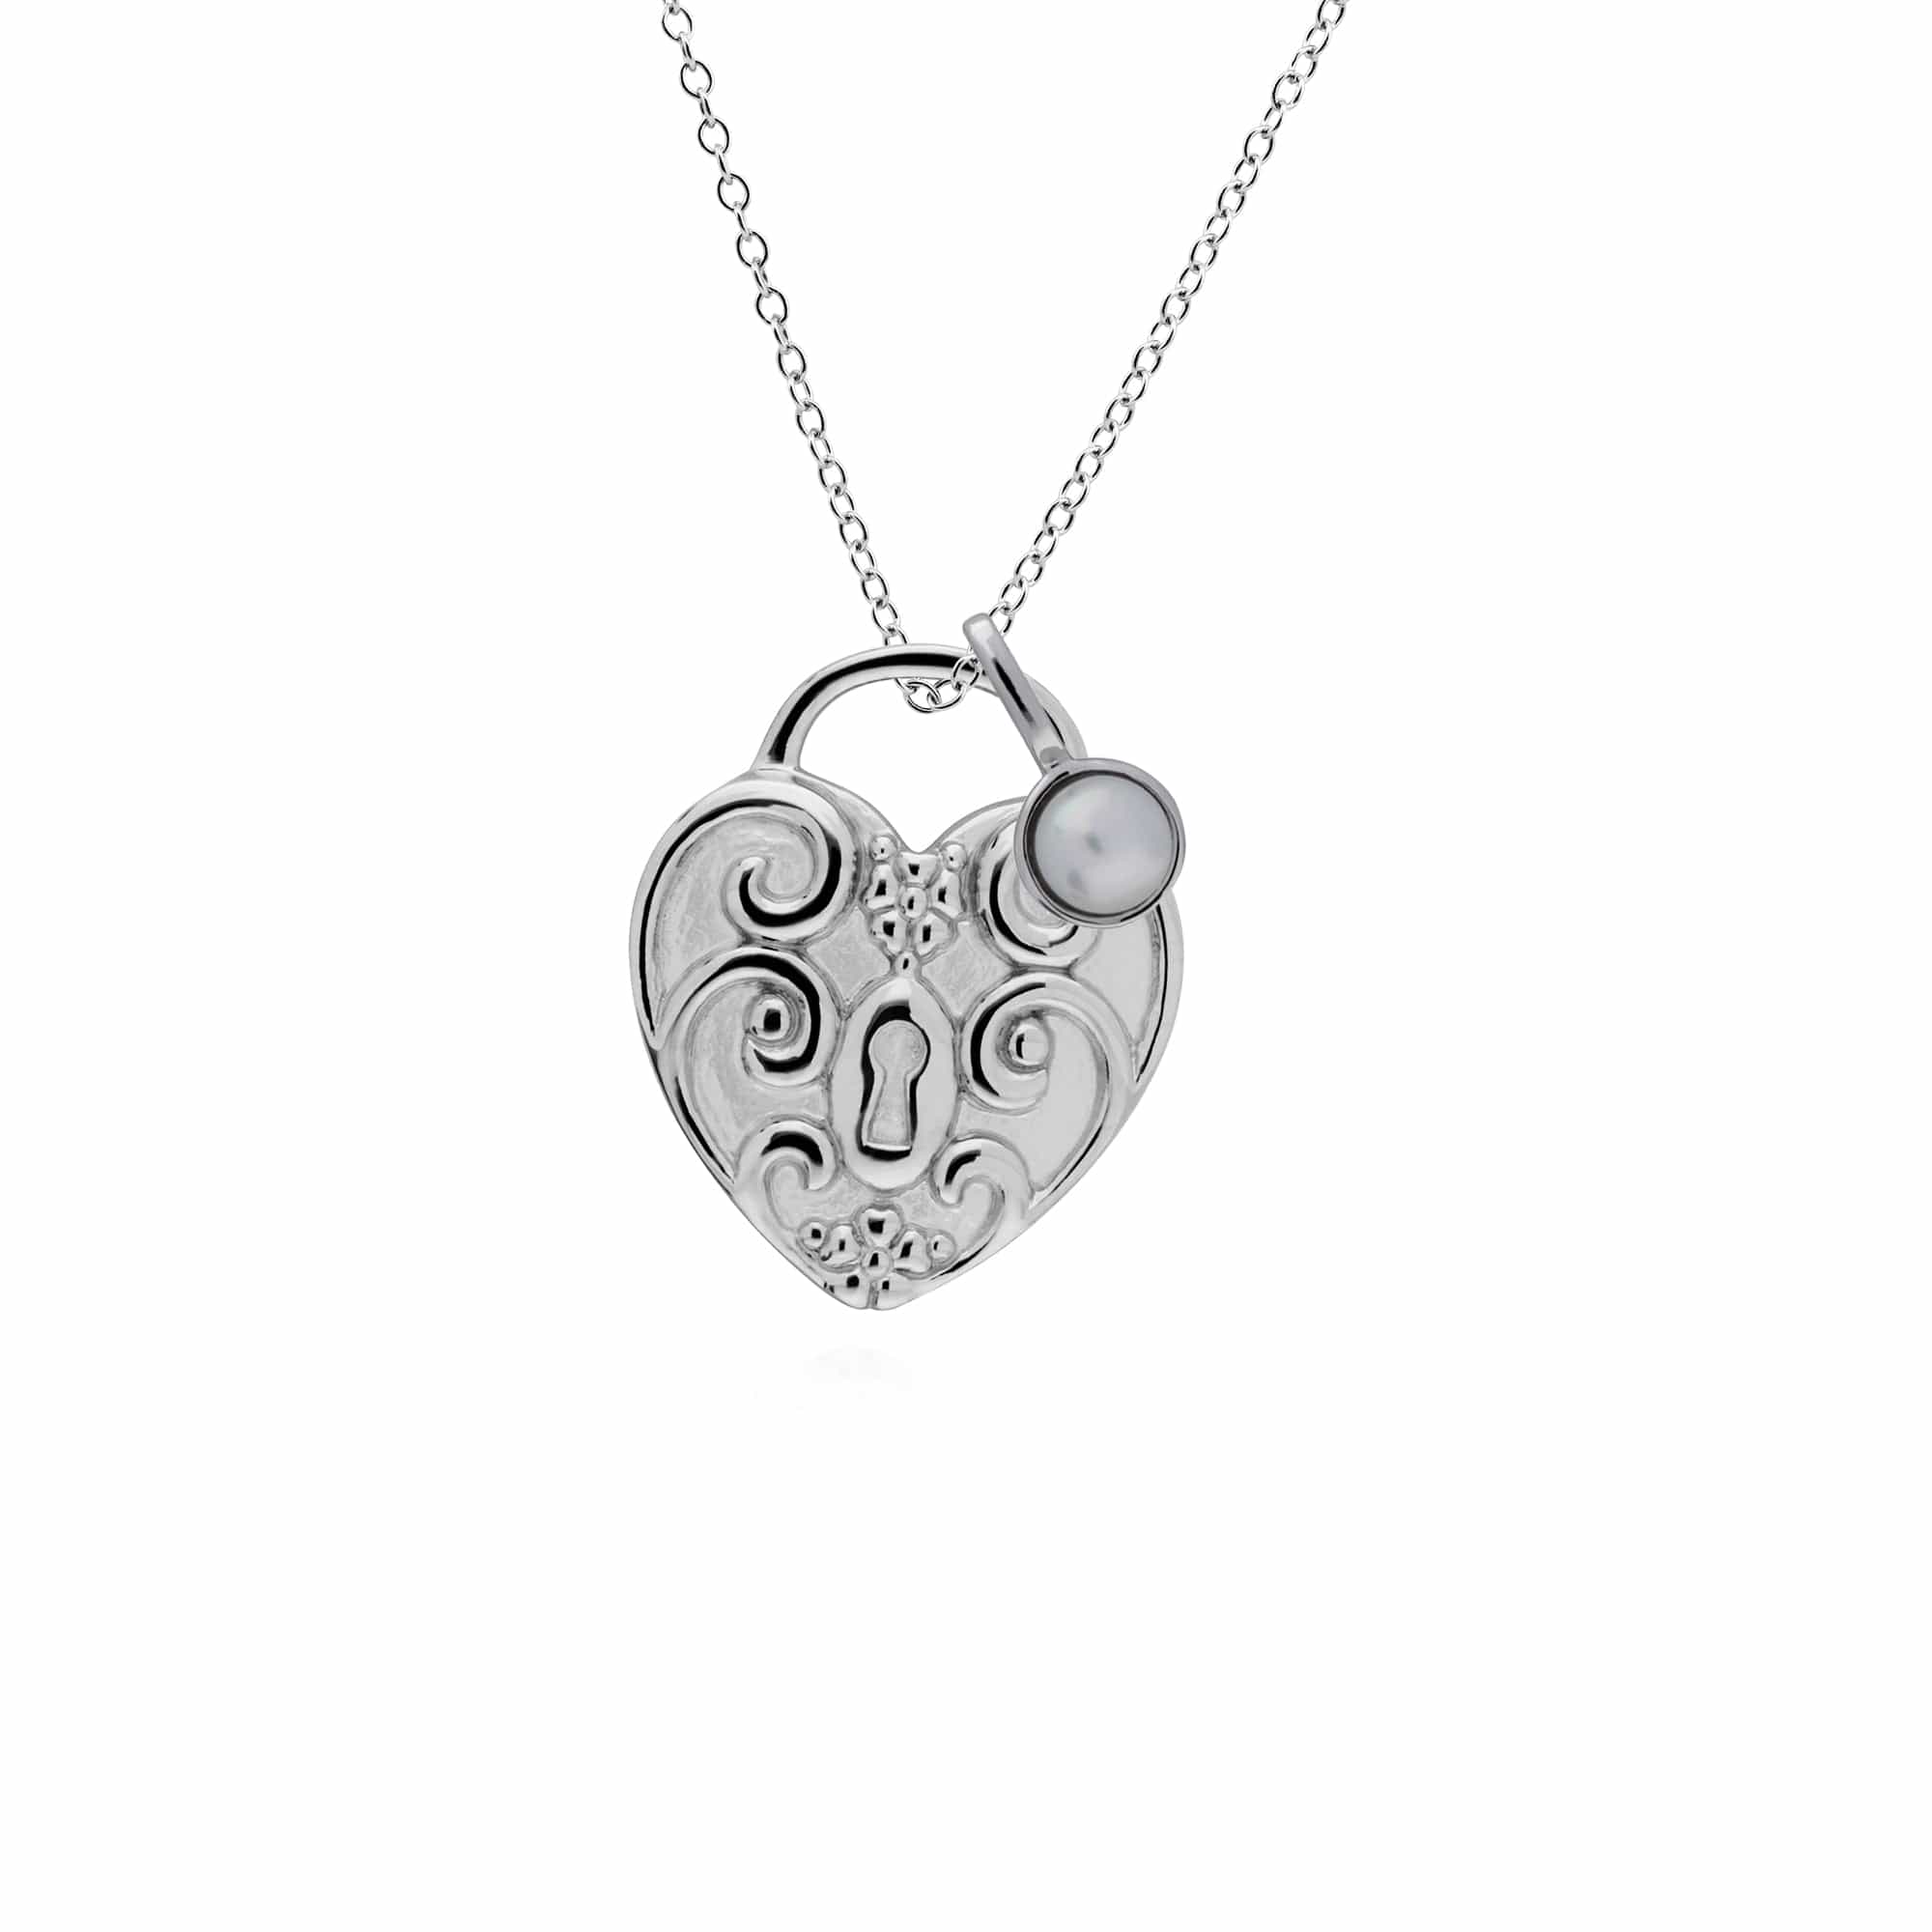 270P025801925-270P026601925 Classic Swirl Heart Lock Pendant & Pearl Charm in 925 Sterling Silver 1